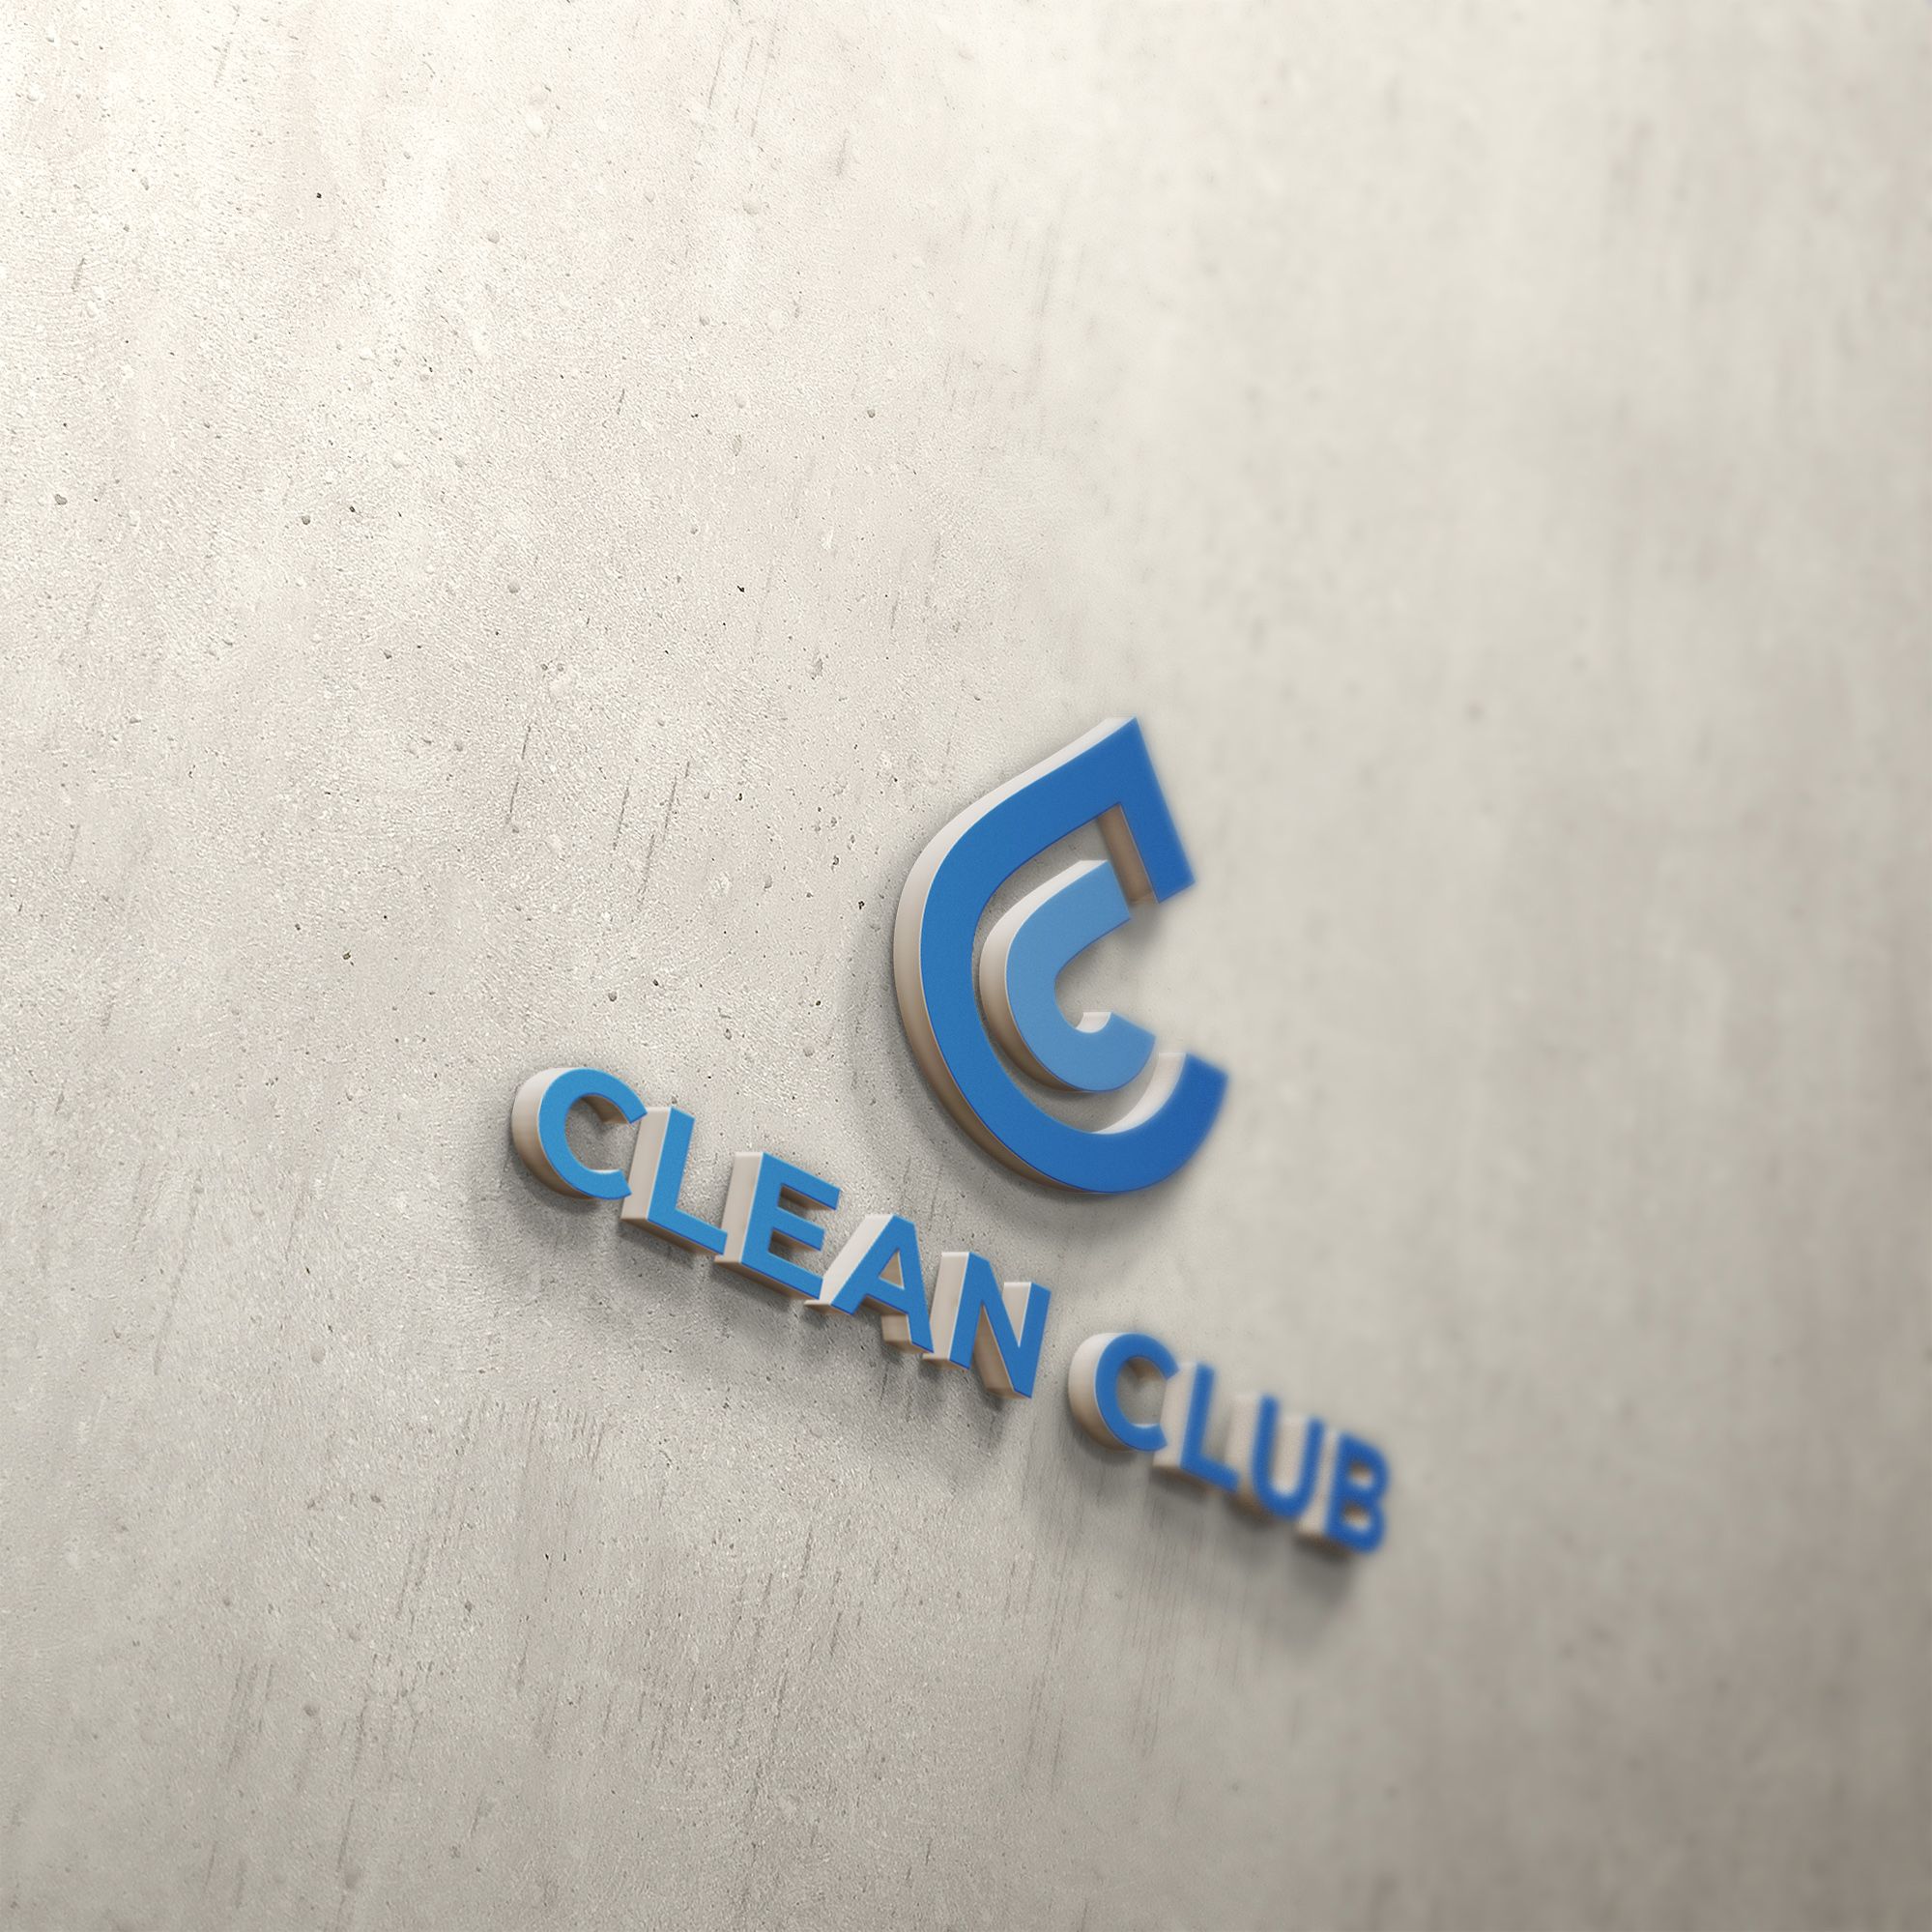 Логотип для CleanClub - дизайнер U4po4mak